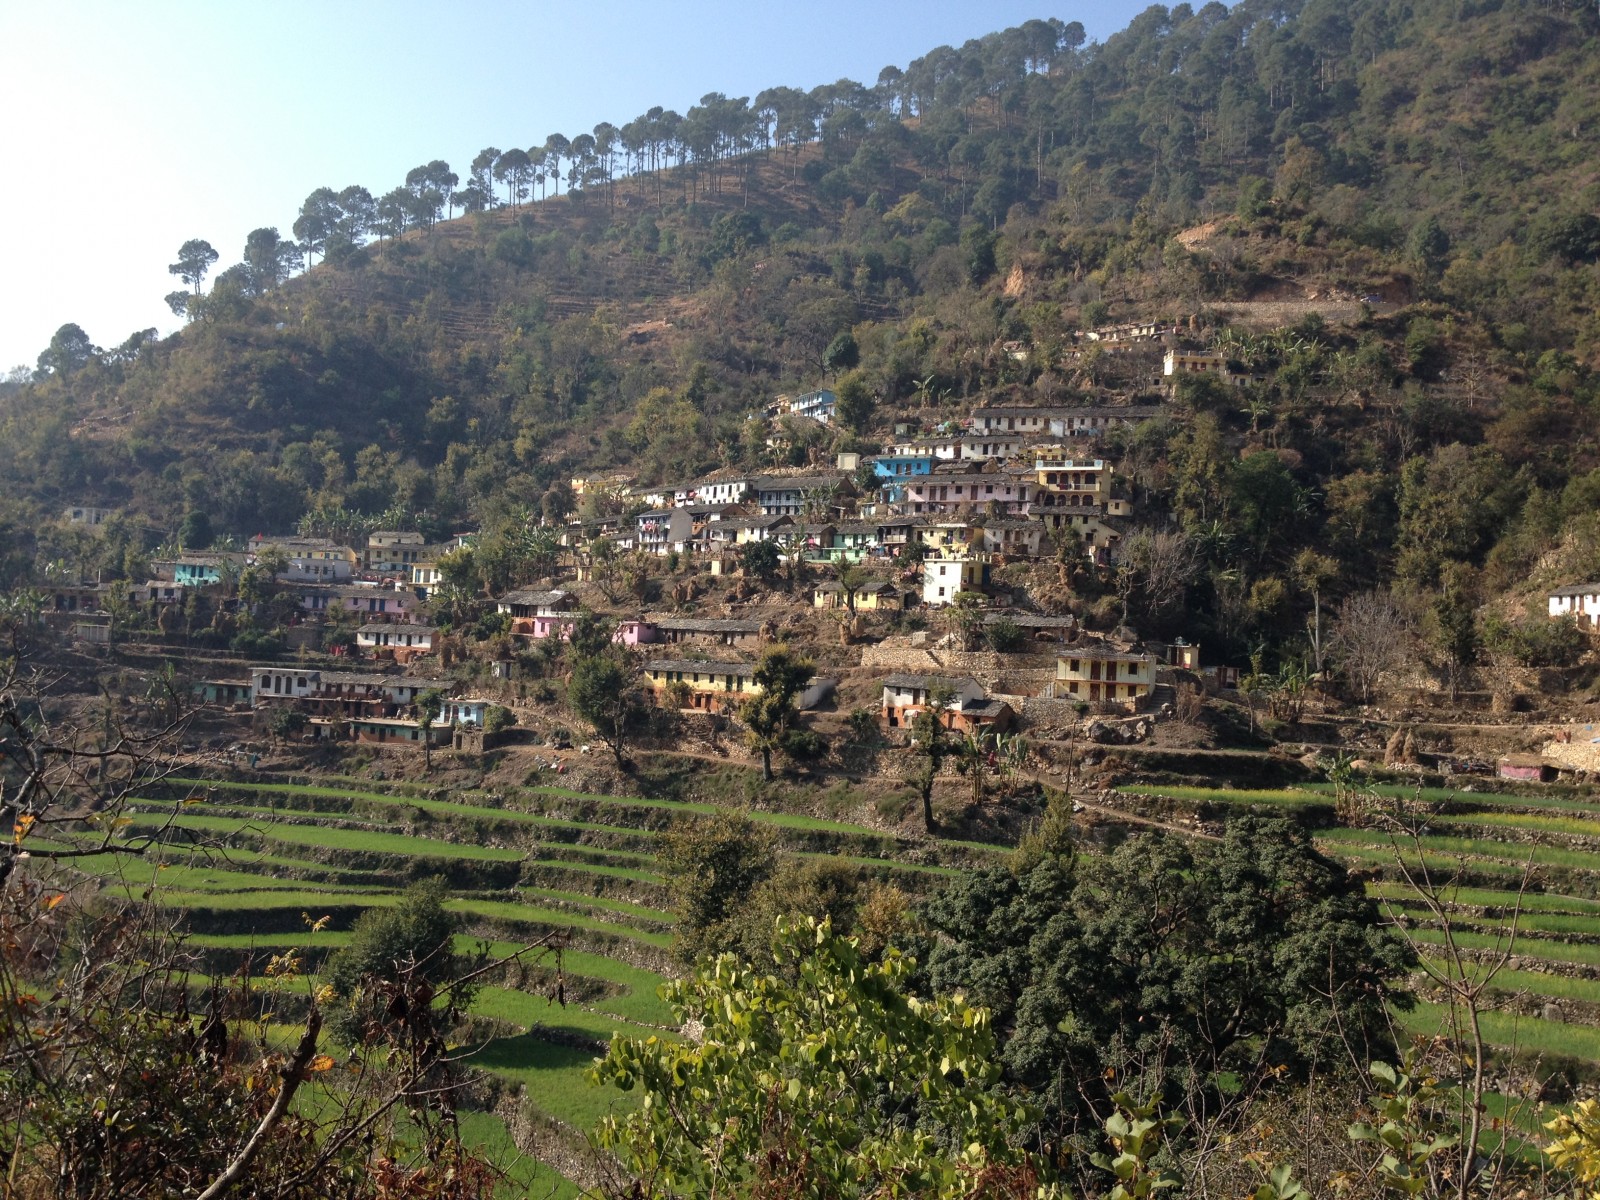 Bansi village, Rudraprayag